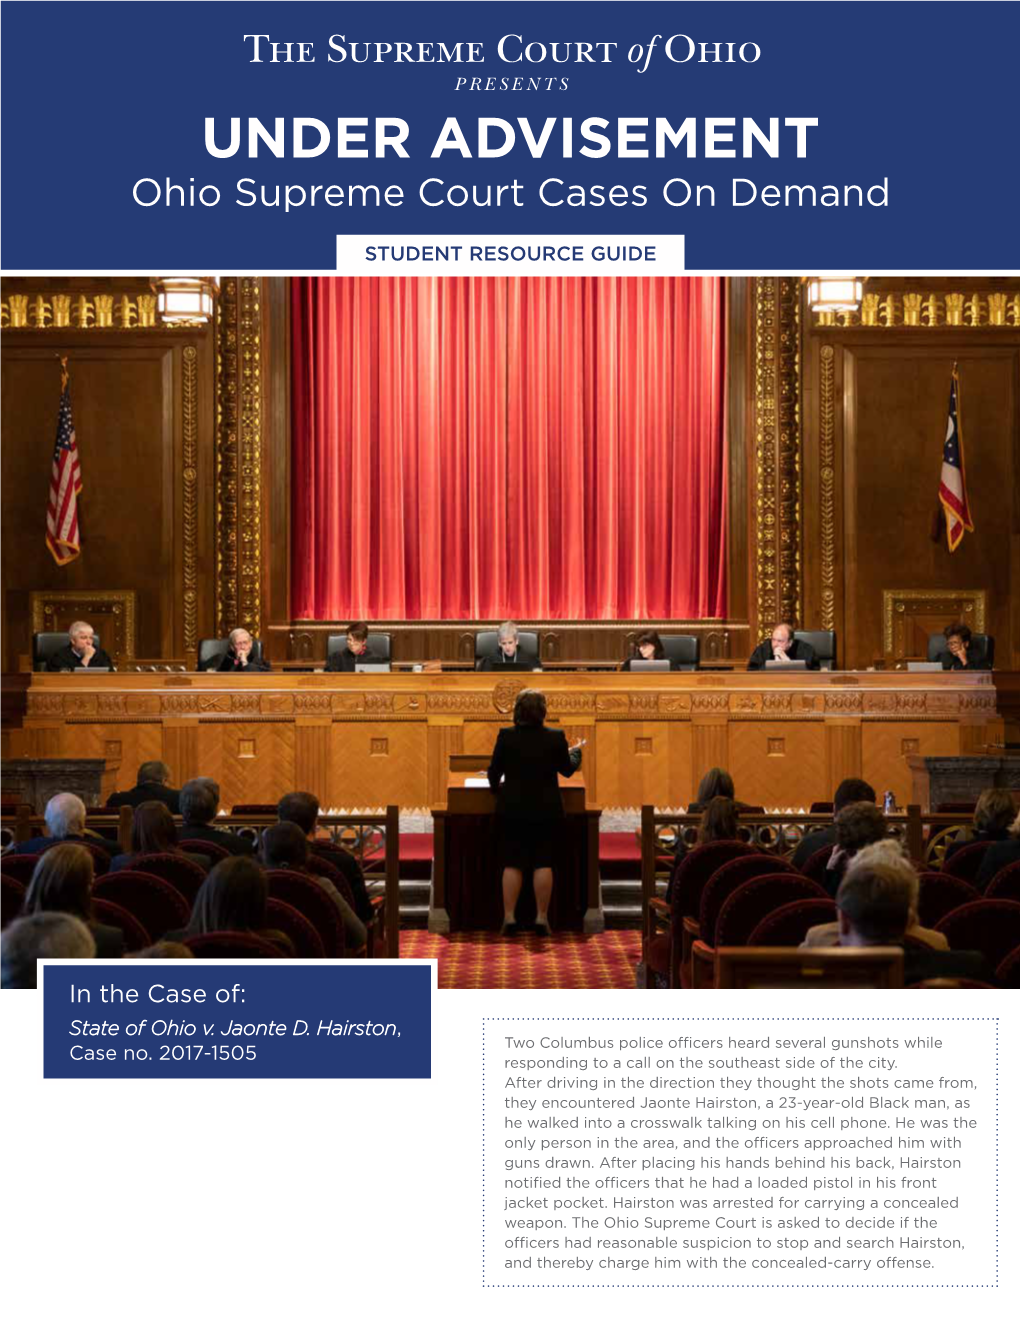 Supreme Court of Ohio Under Advisement: State of Ohio V. Jaonte